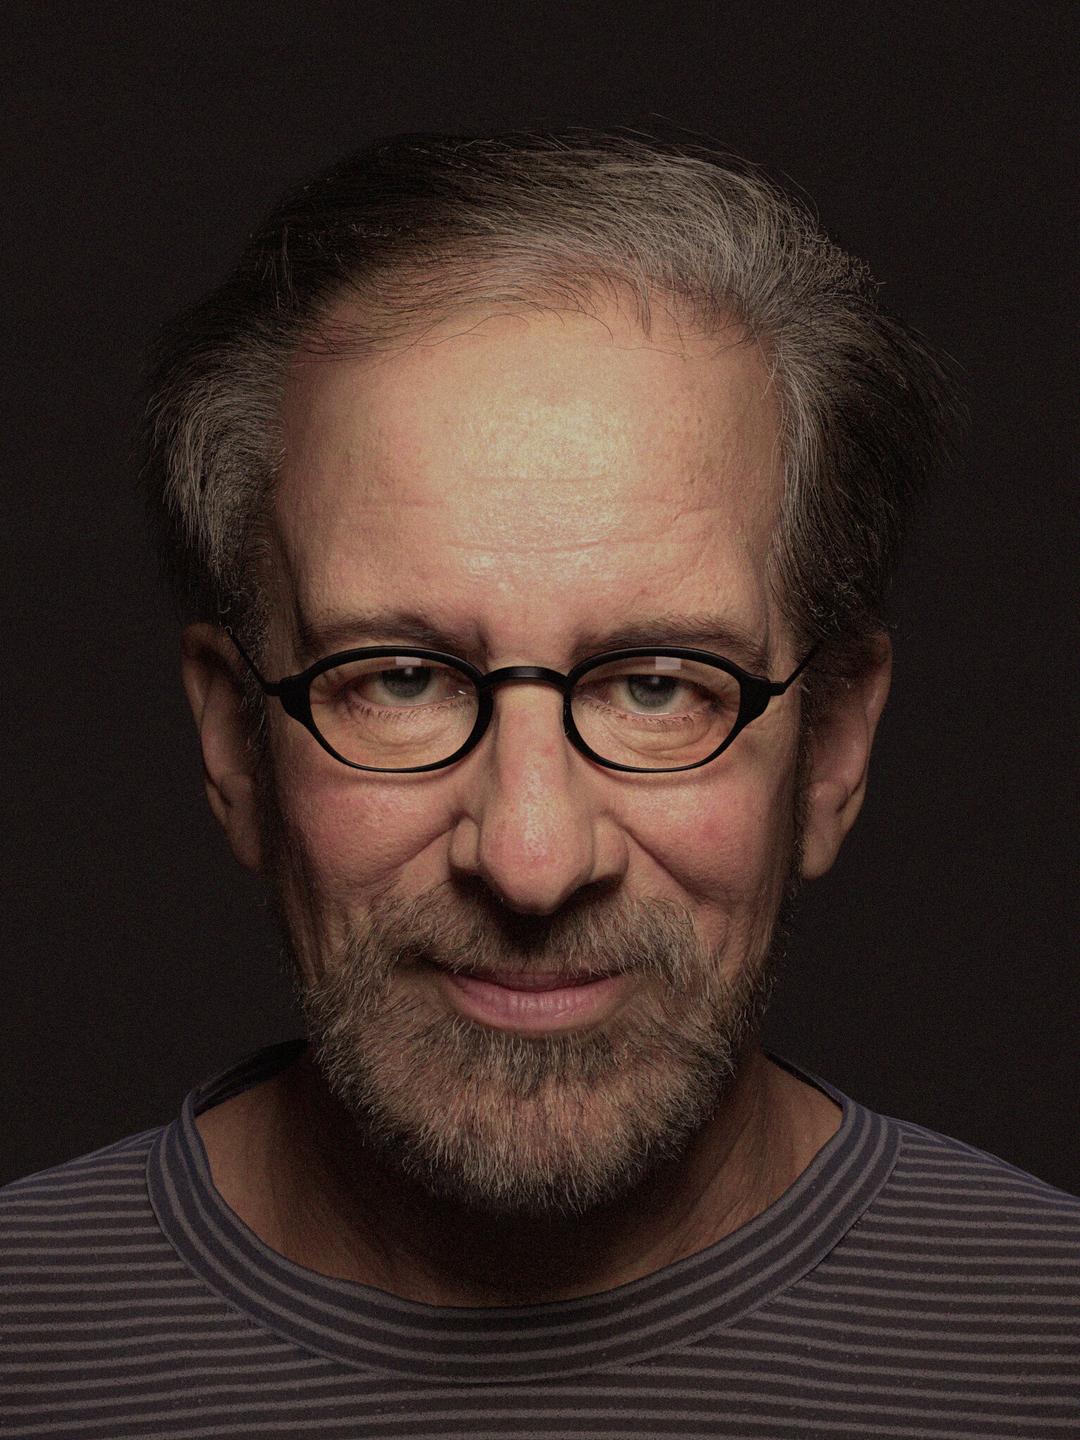 Steven Spielberg upbringing